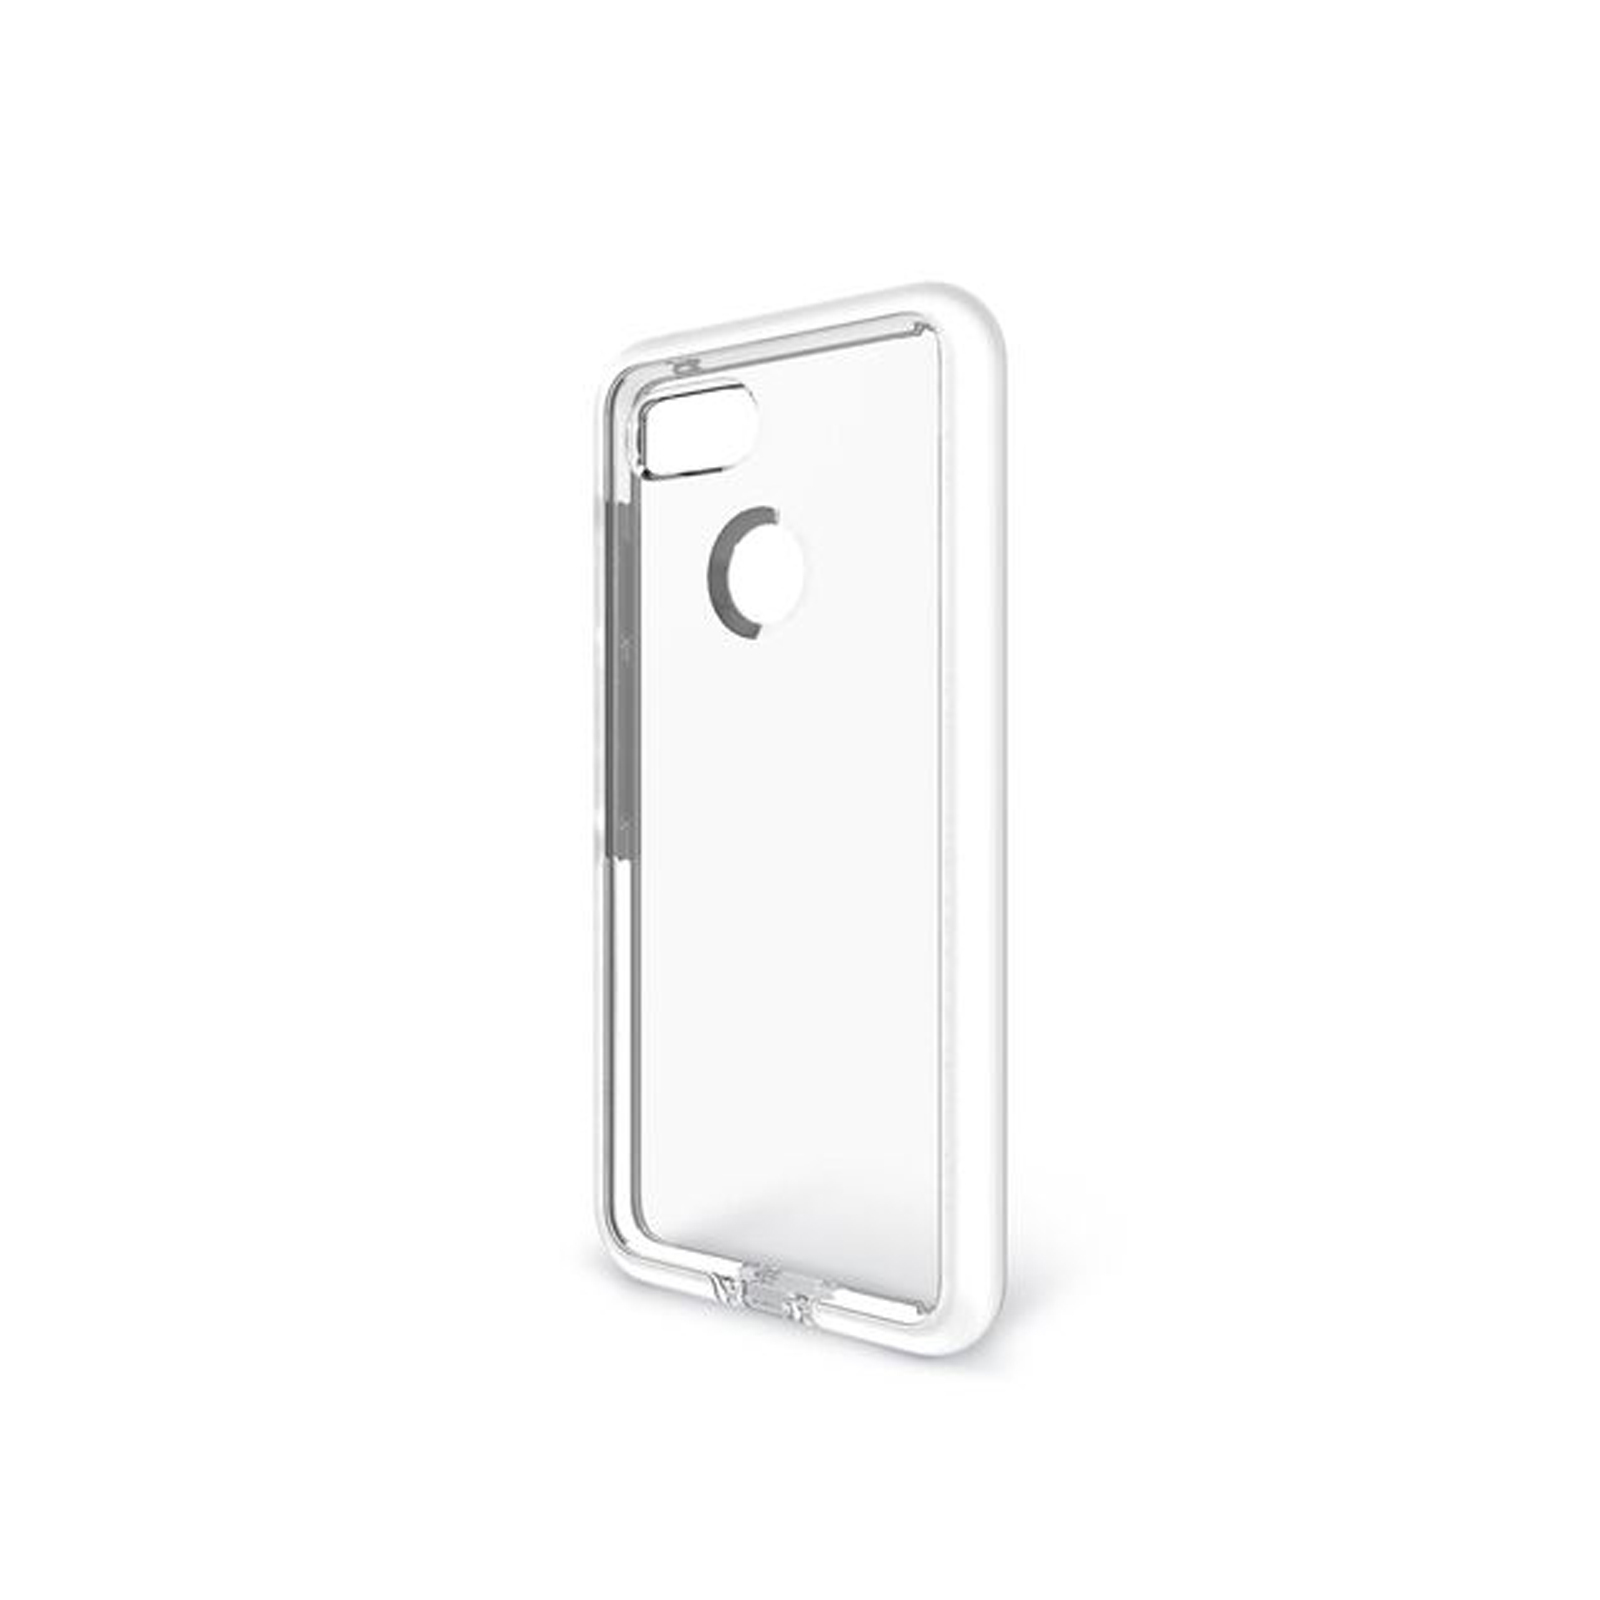 AcePro Google Pixel 3 XL Clear Case Brand New